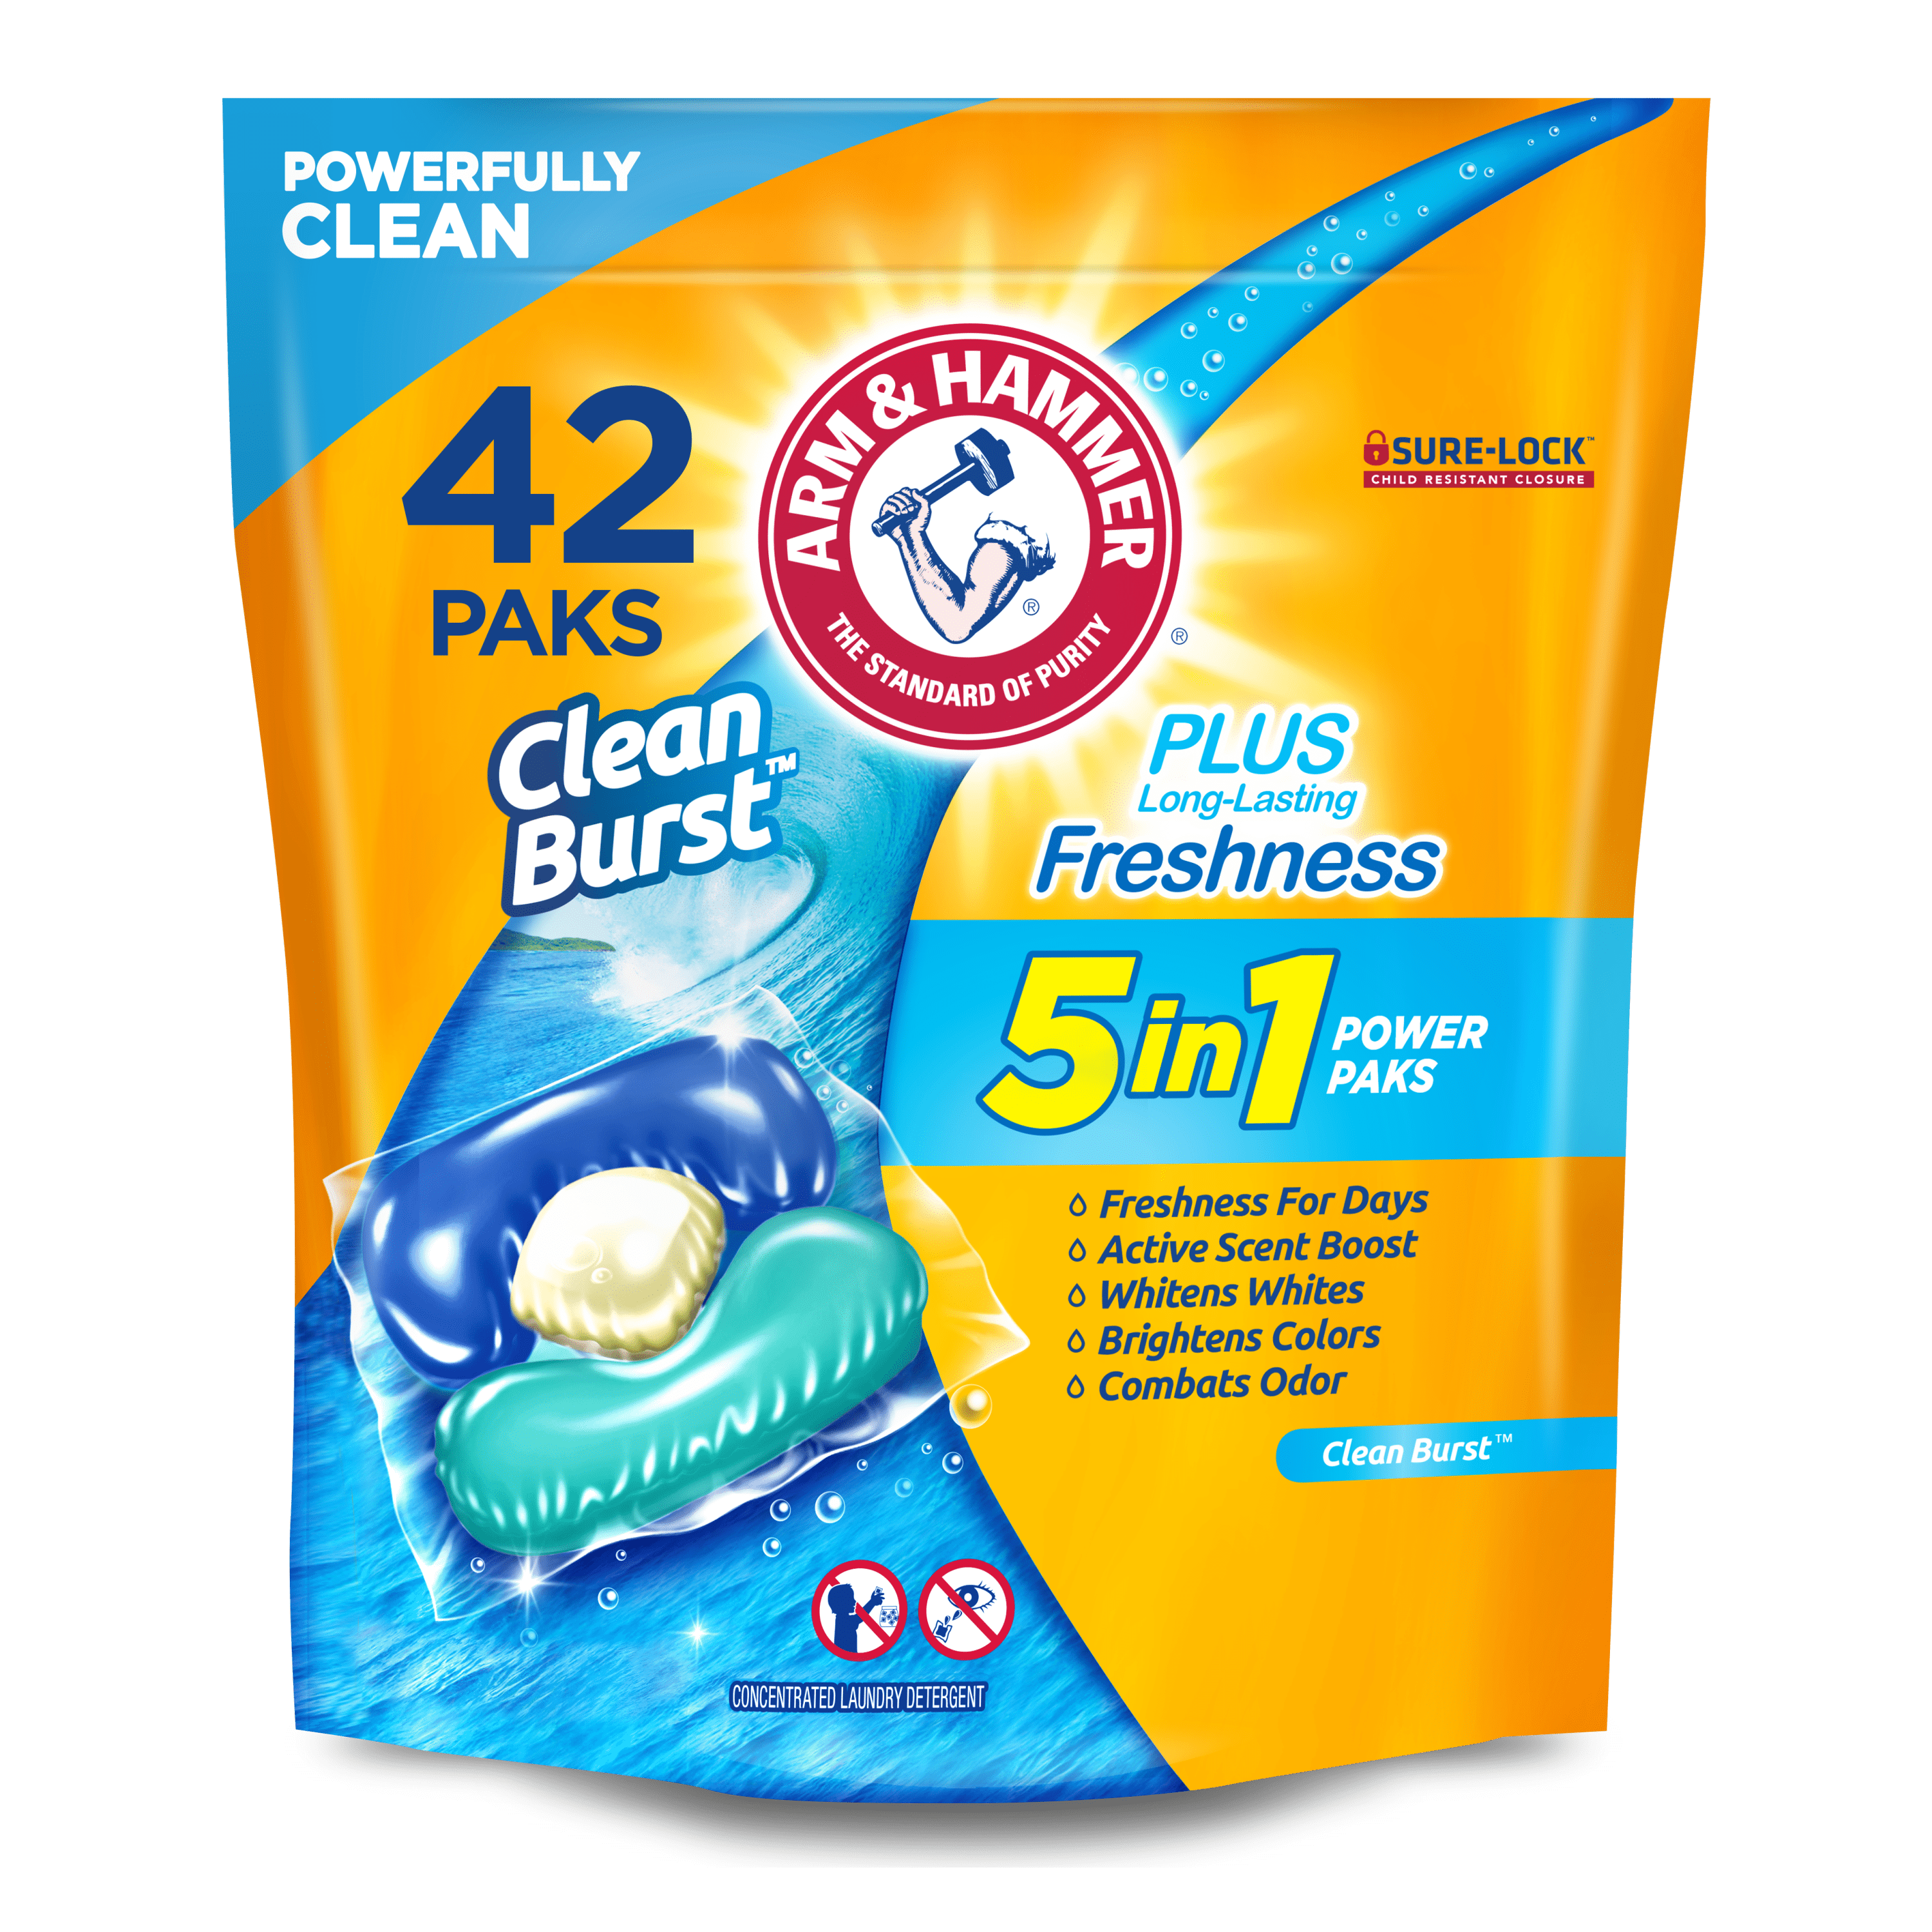 Laundry Detergent Power Paks